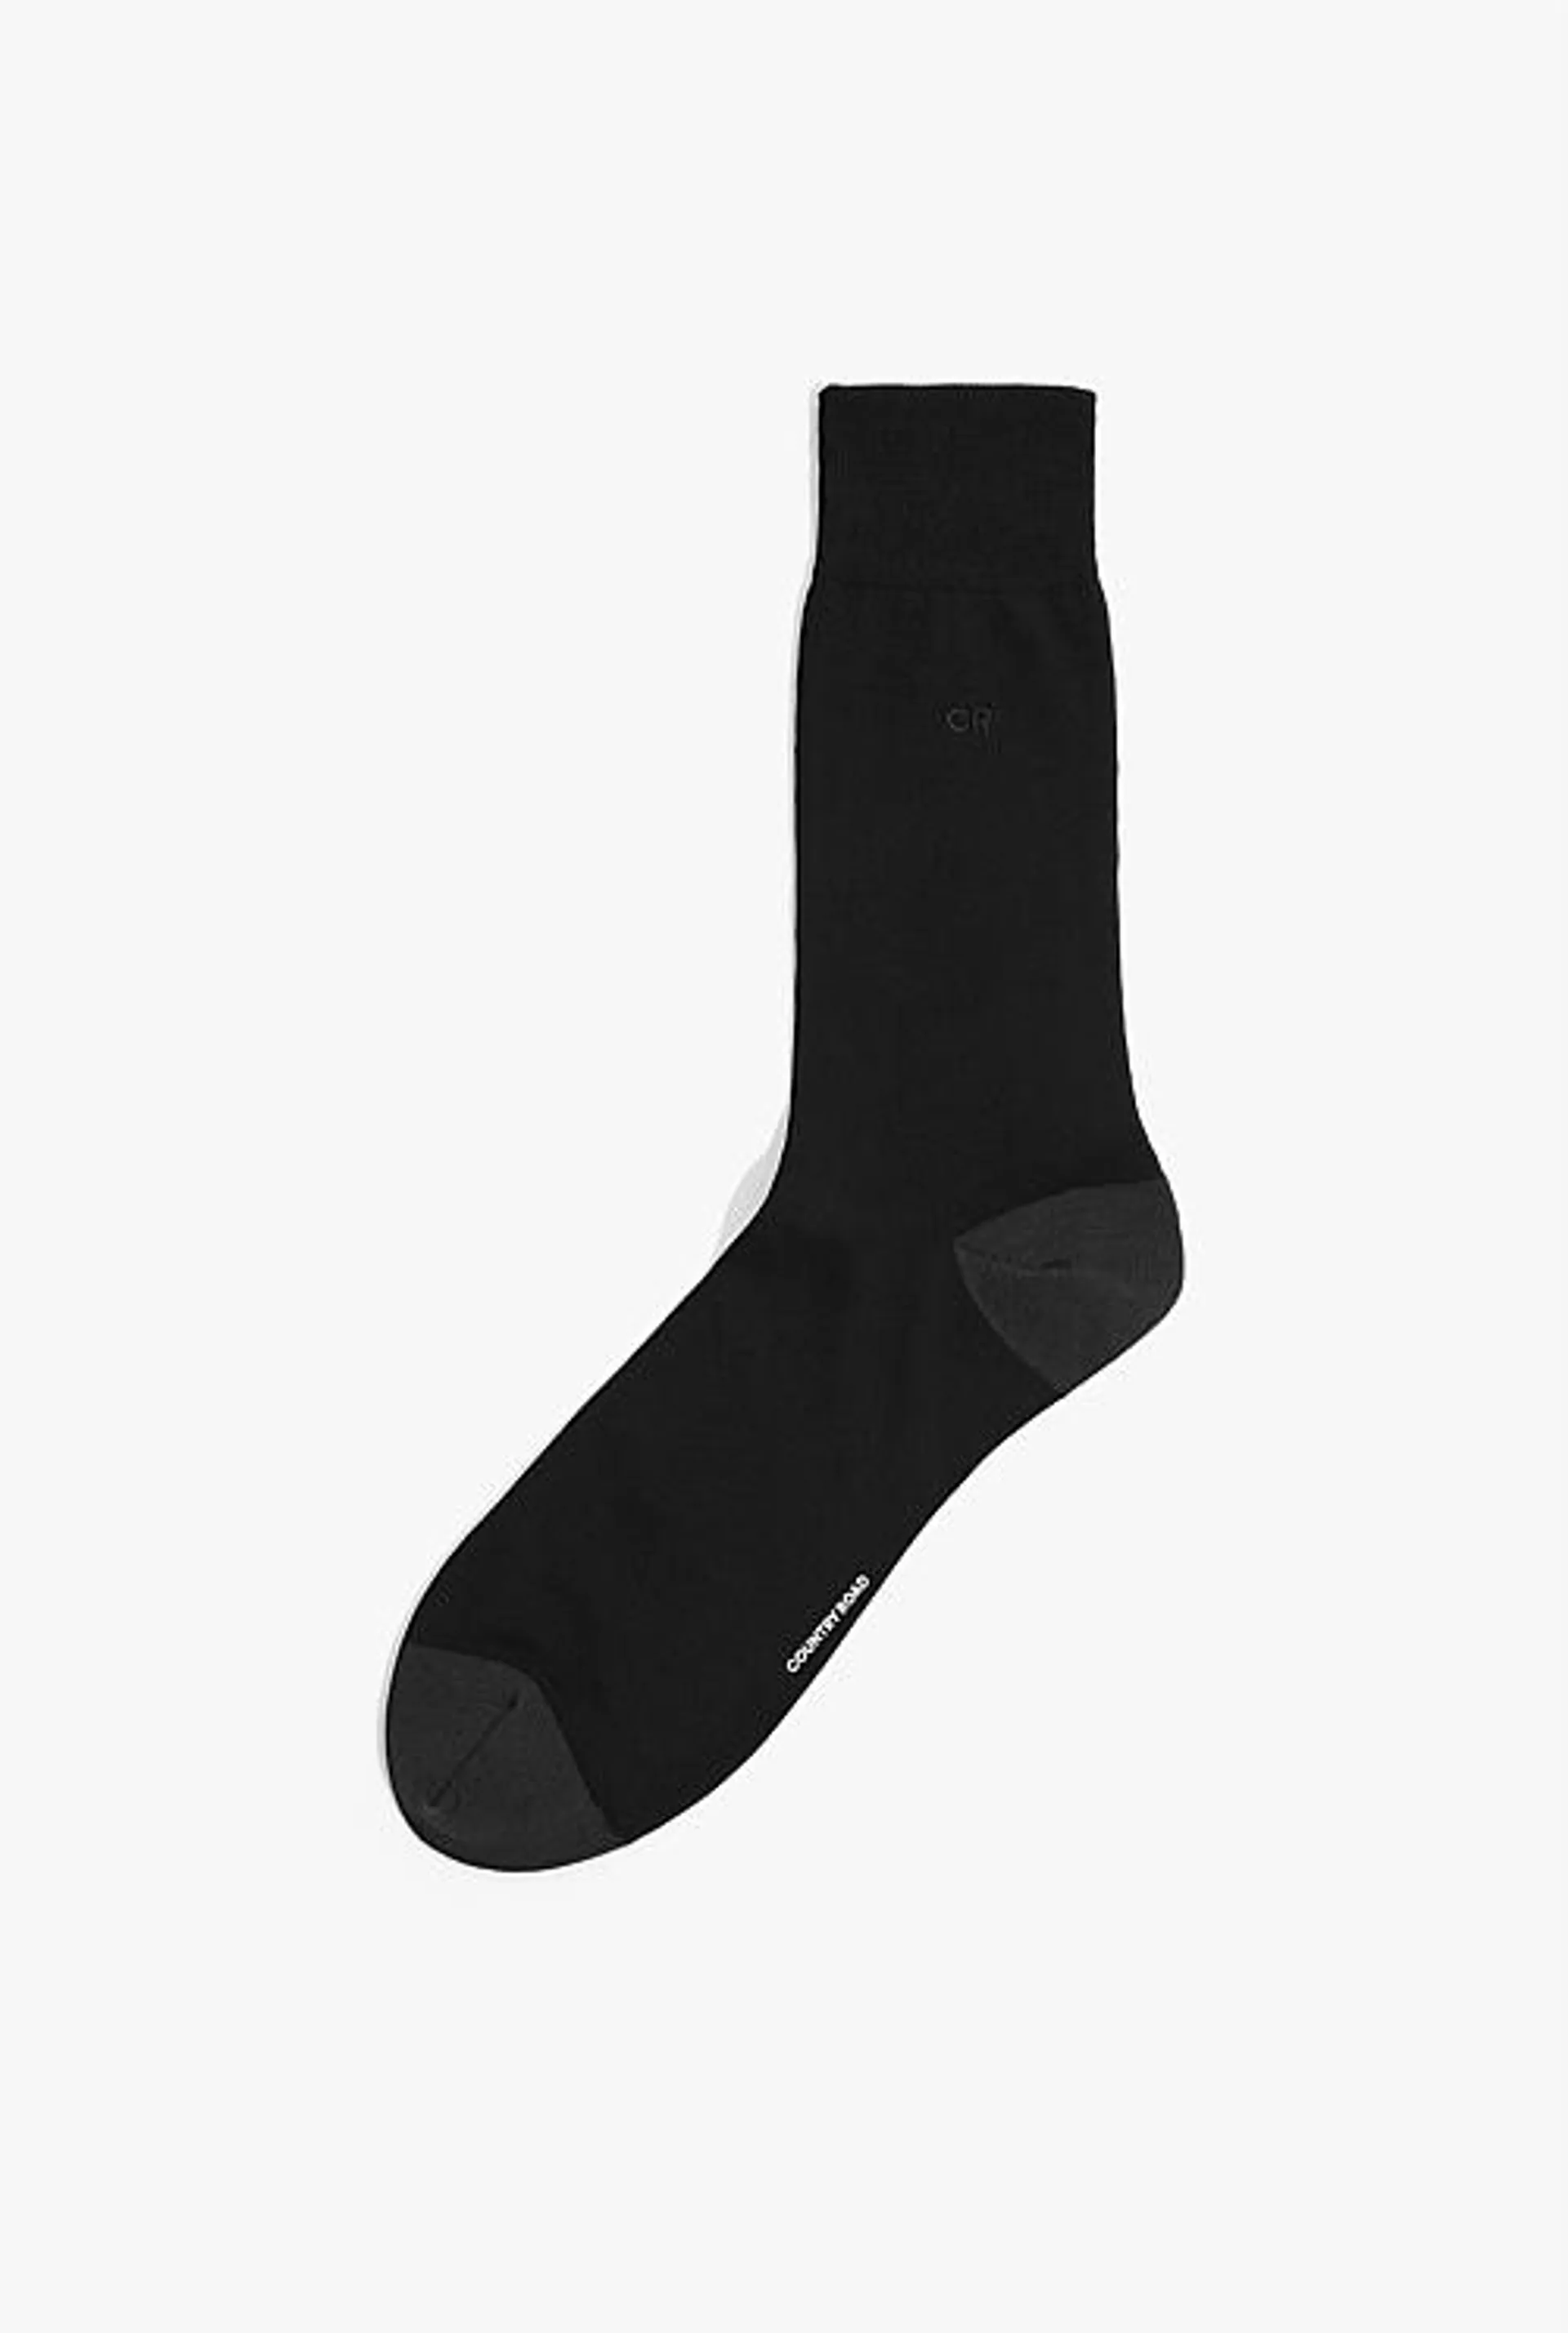 Contrast Socks